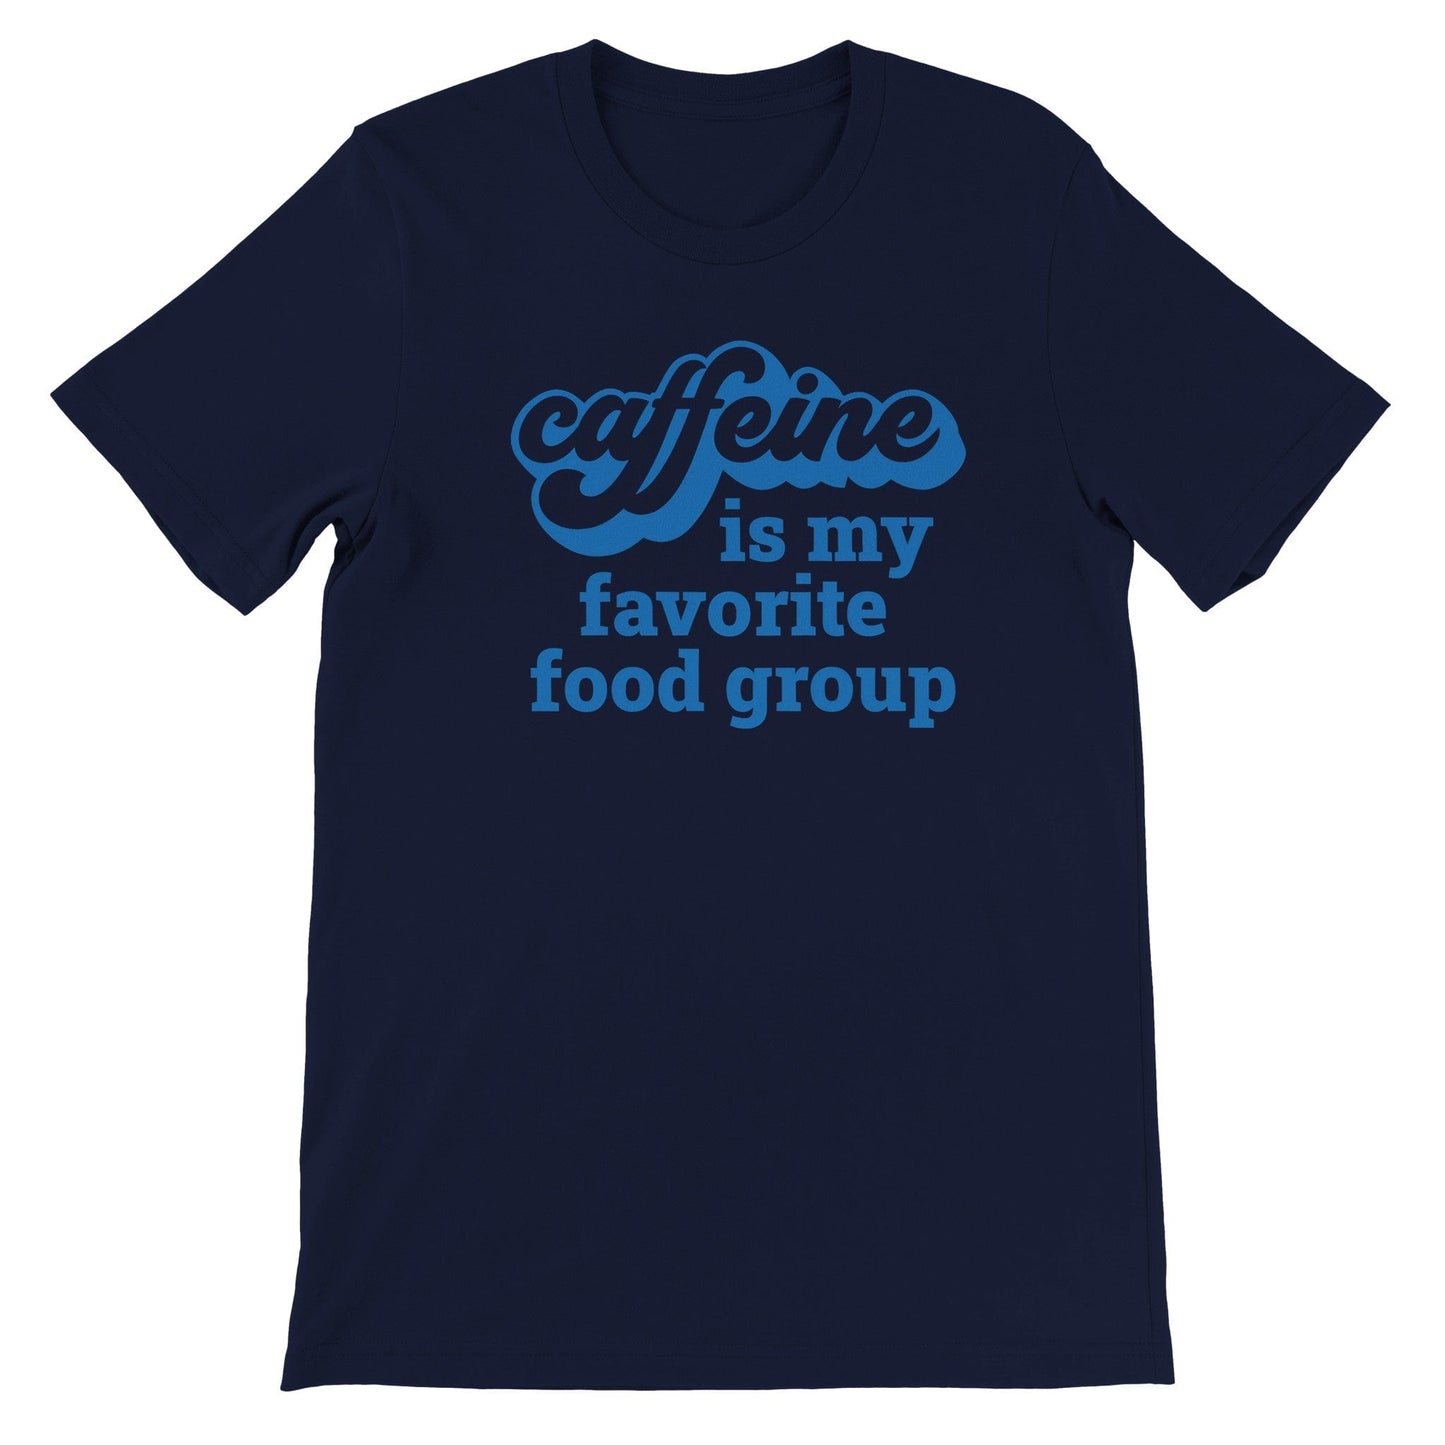 Good Bean Gifts "Caffeine is my favorite food group" Unisex Crewneck T-shirt Navy / S